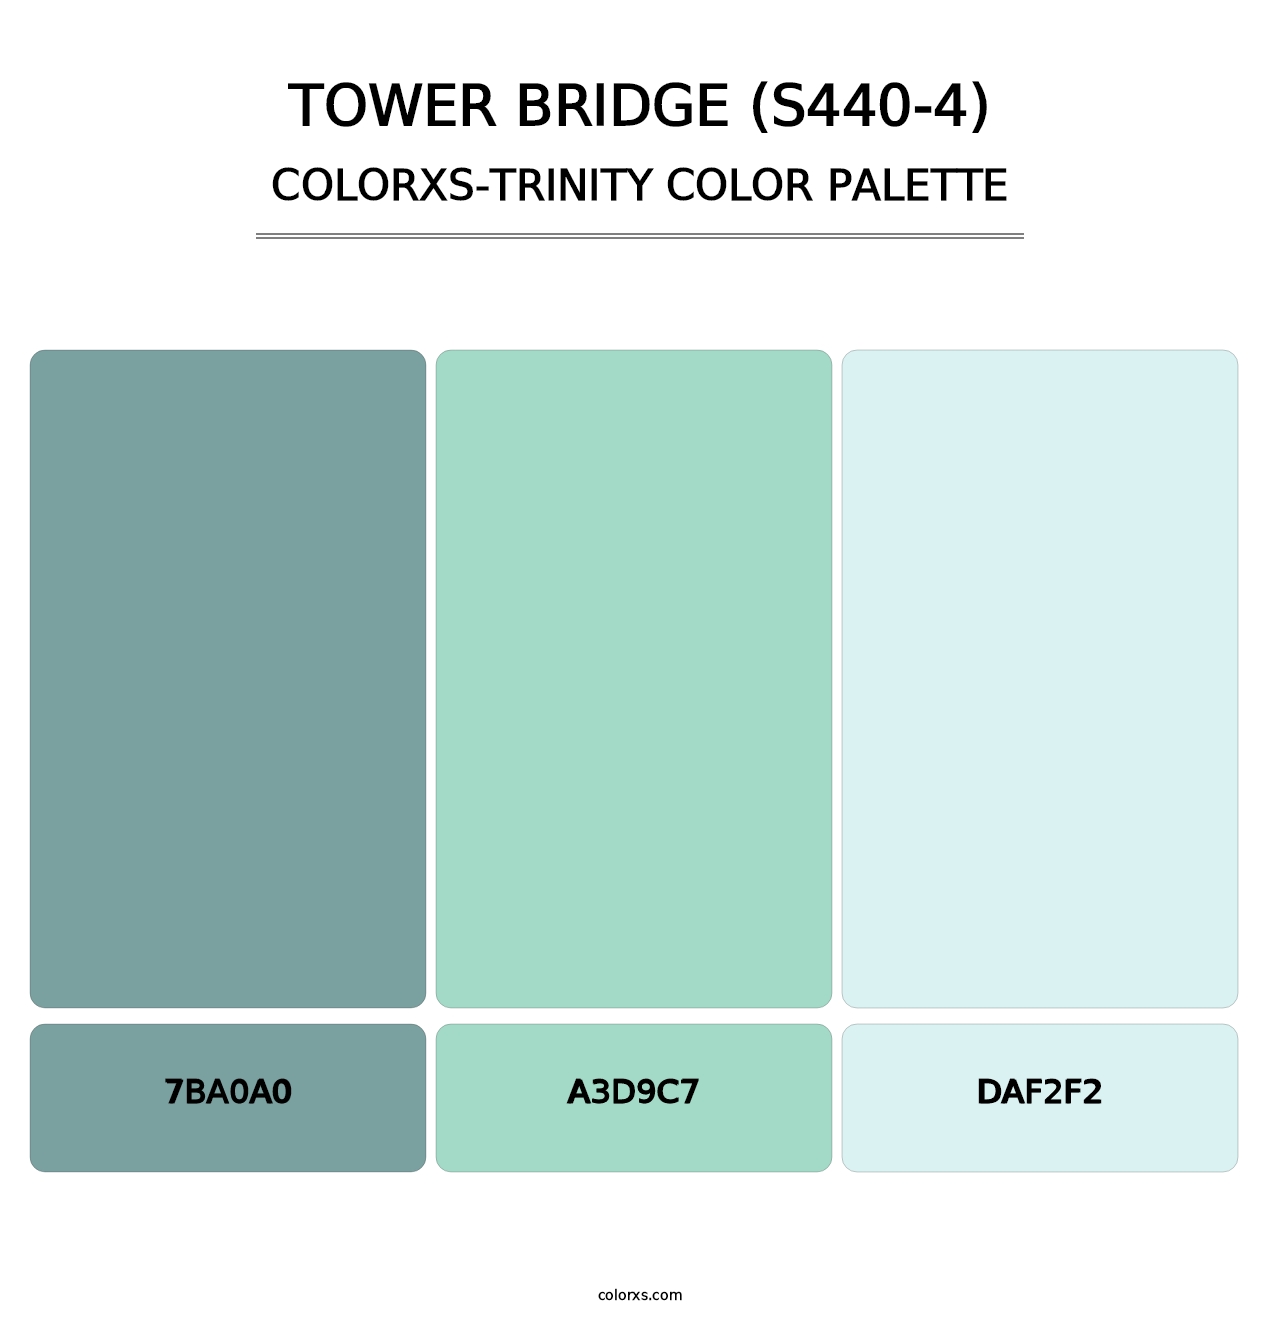 Tower Bridge (S440-4) - Colorxs Trinity Palette